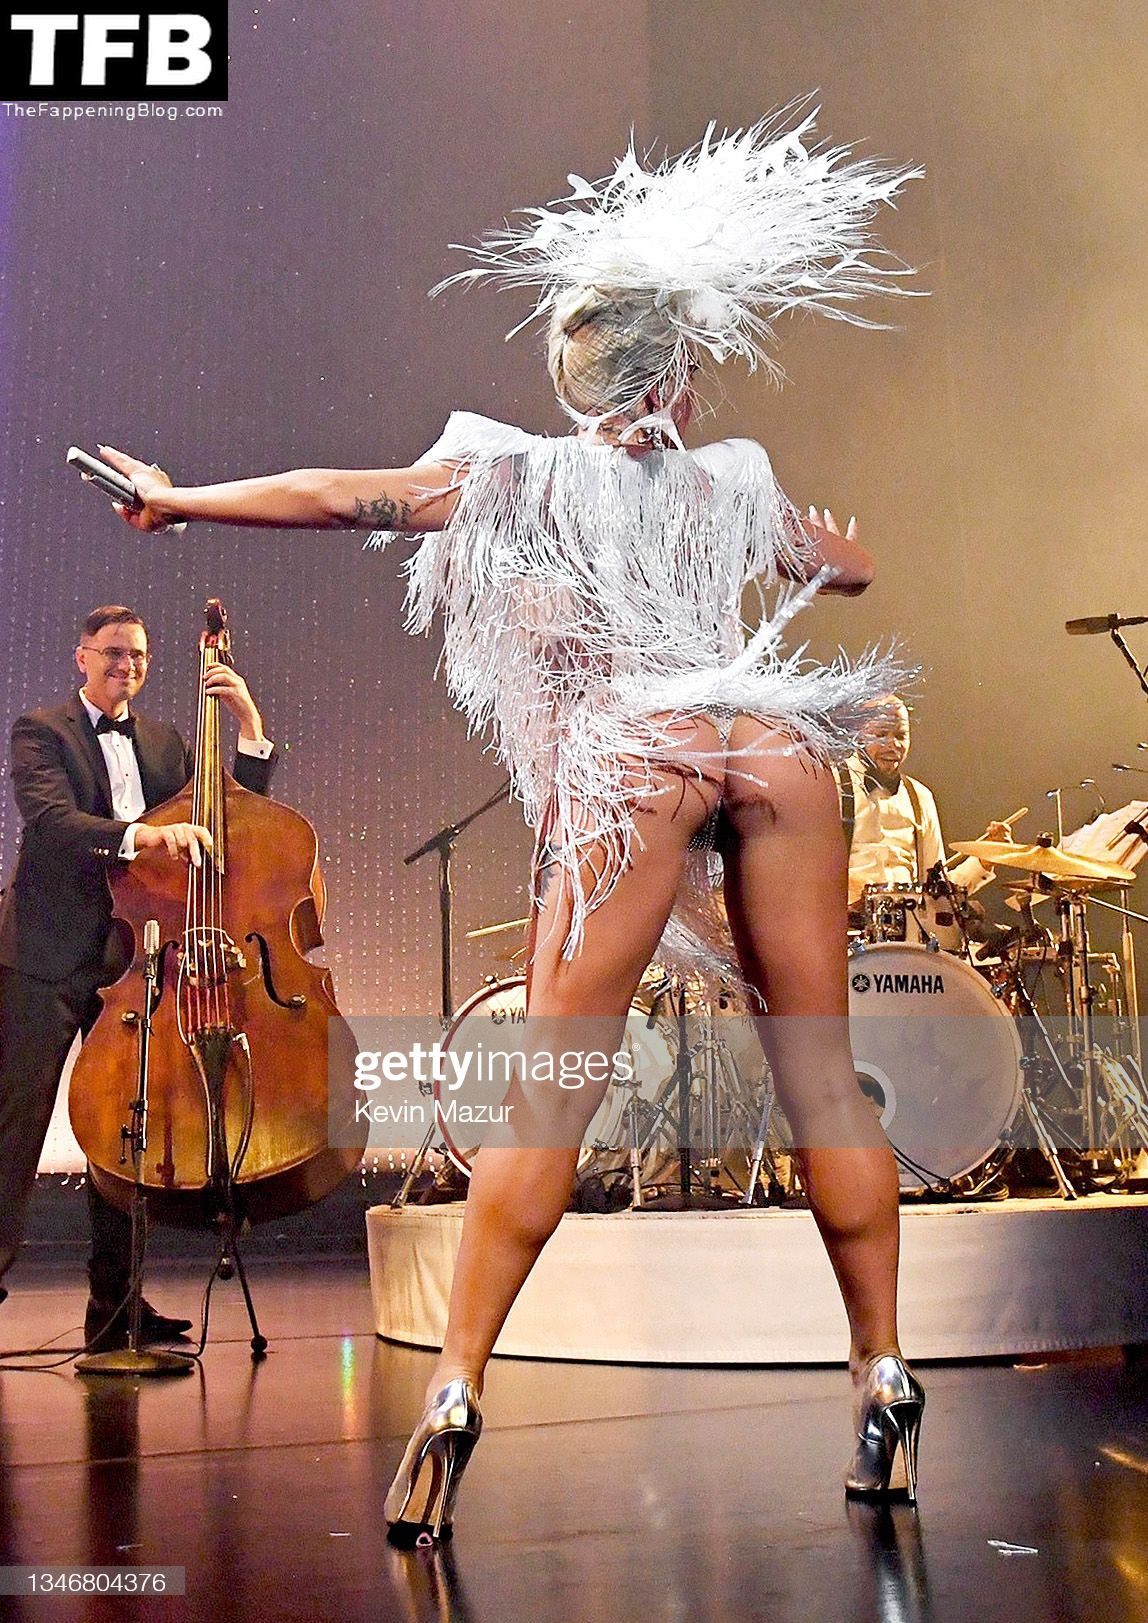 Lady-Gaga-Sexy-Ass-The-Fappening-Blog-2.jpg